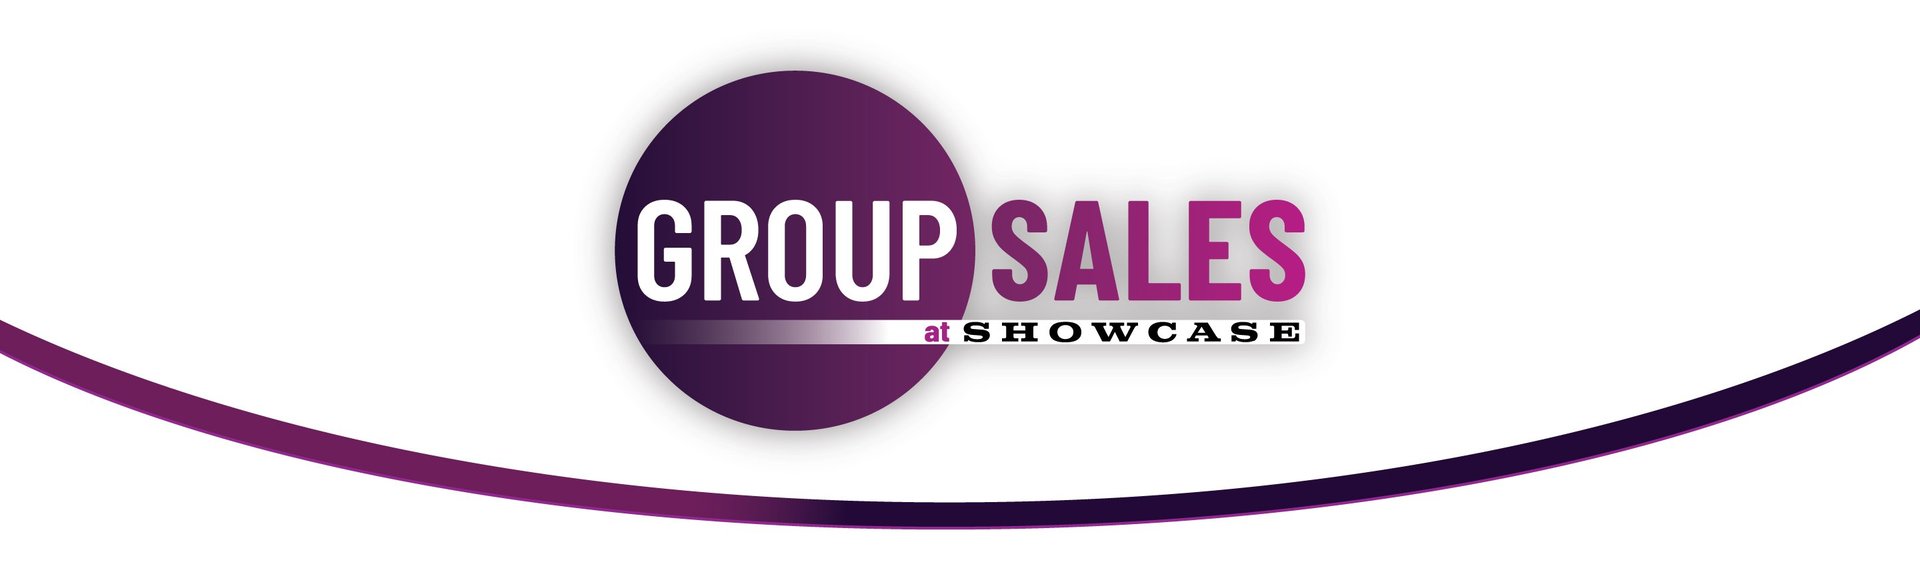 Group sales at Showcase